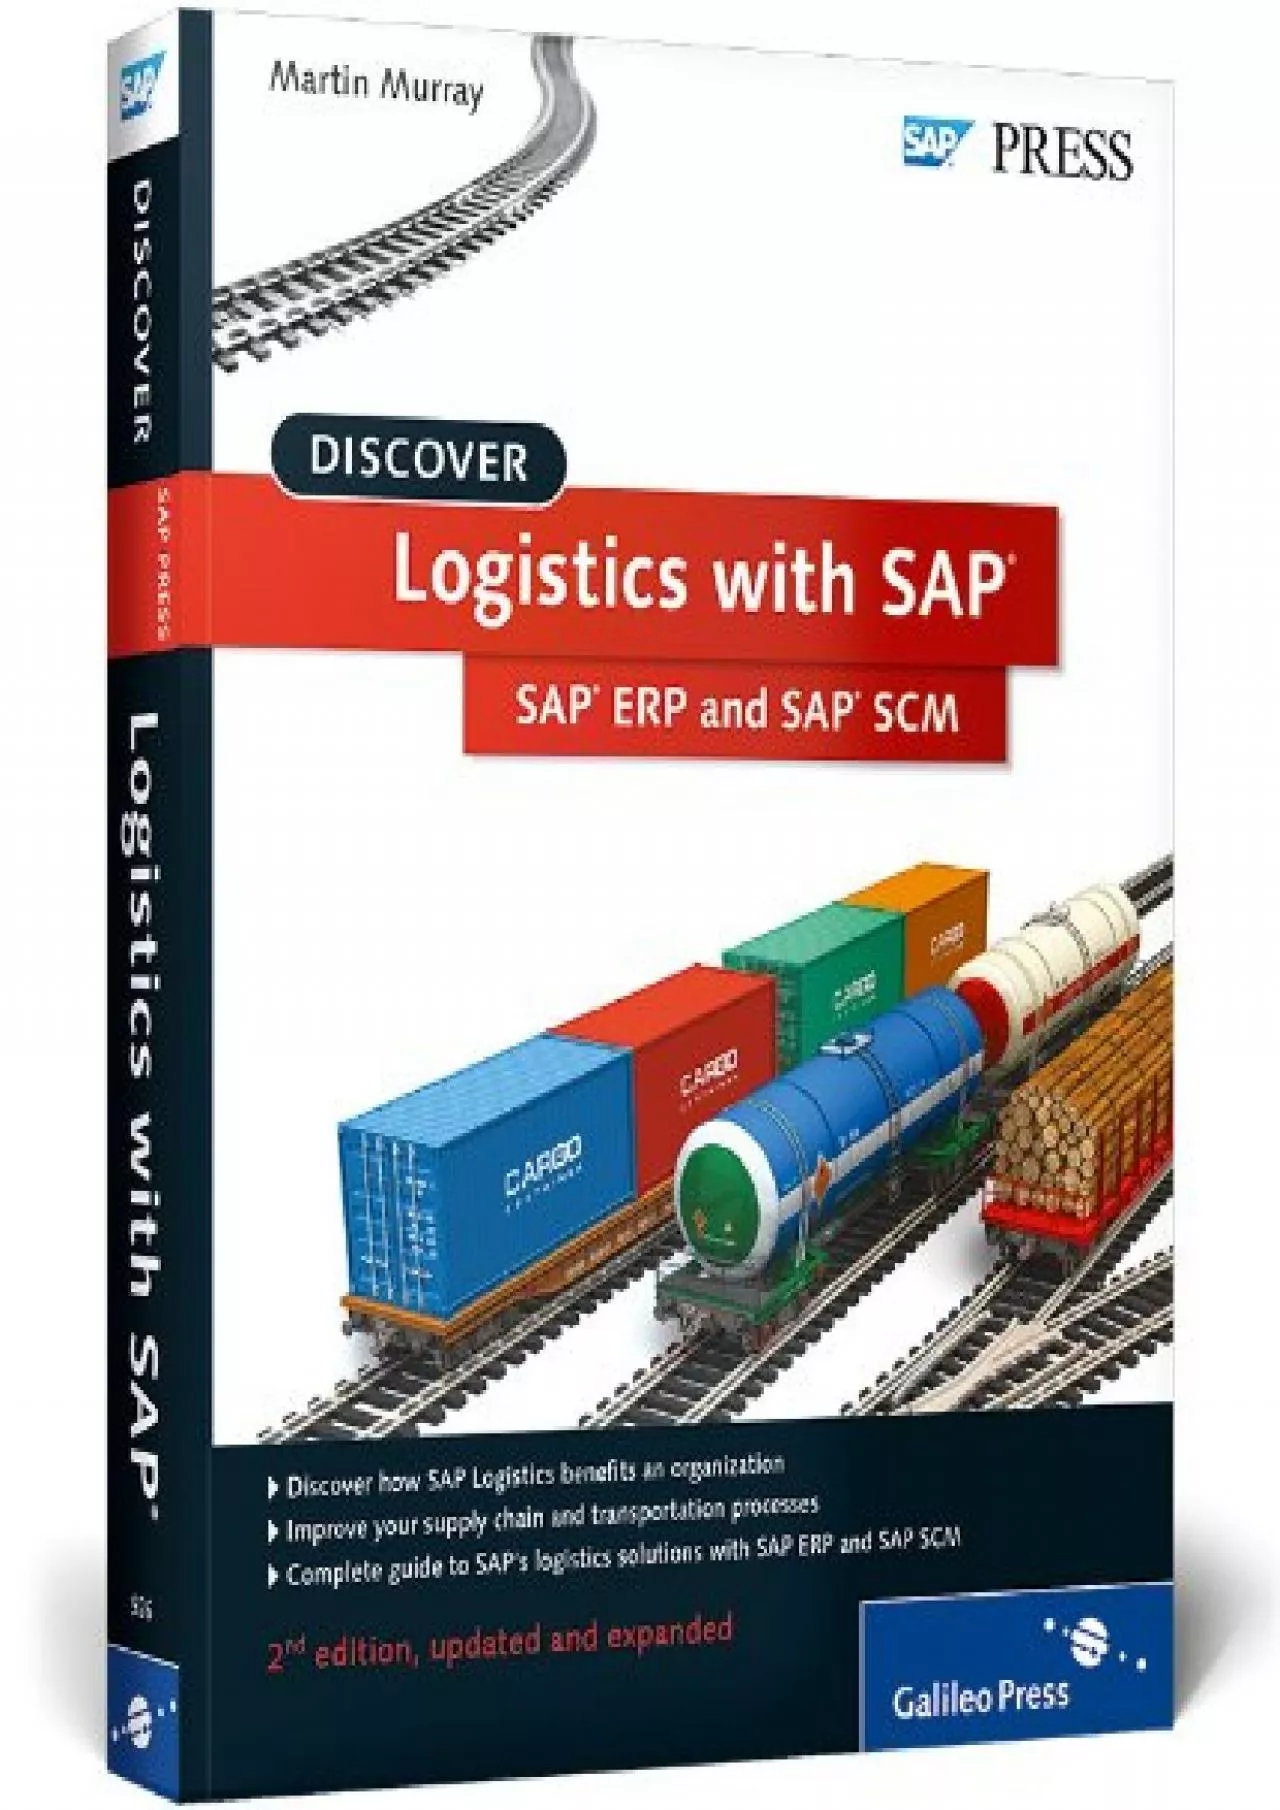 SAP Logistics: An Introduction to SAP ERP and SAP Supply Chain Management (SAP SCM) (SAP